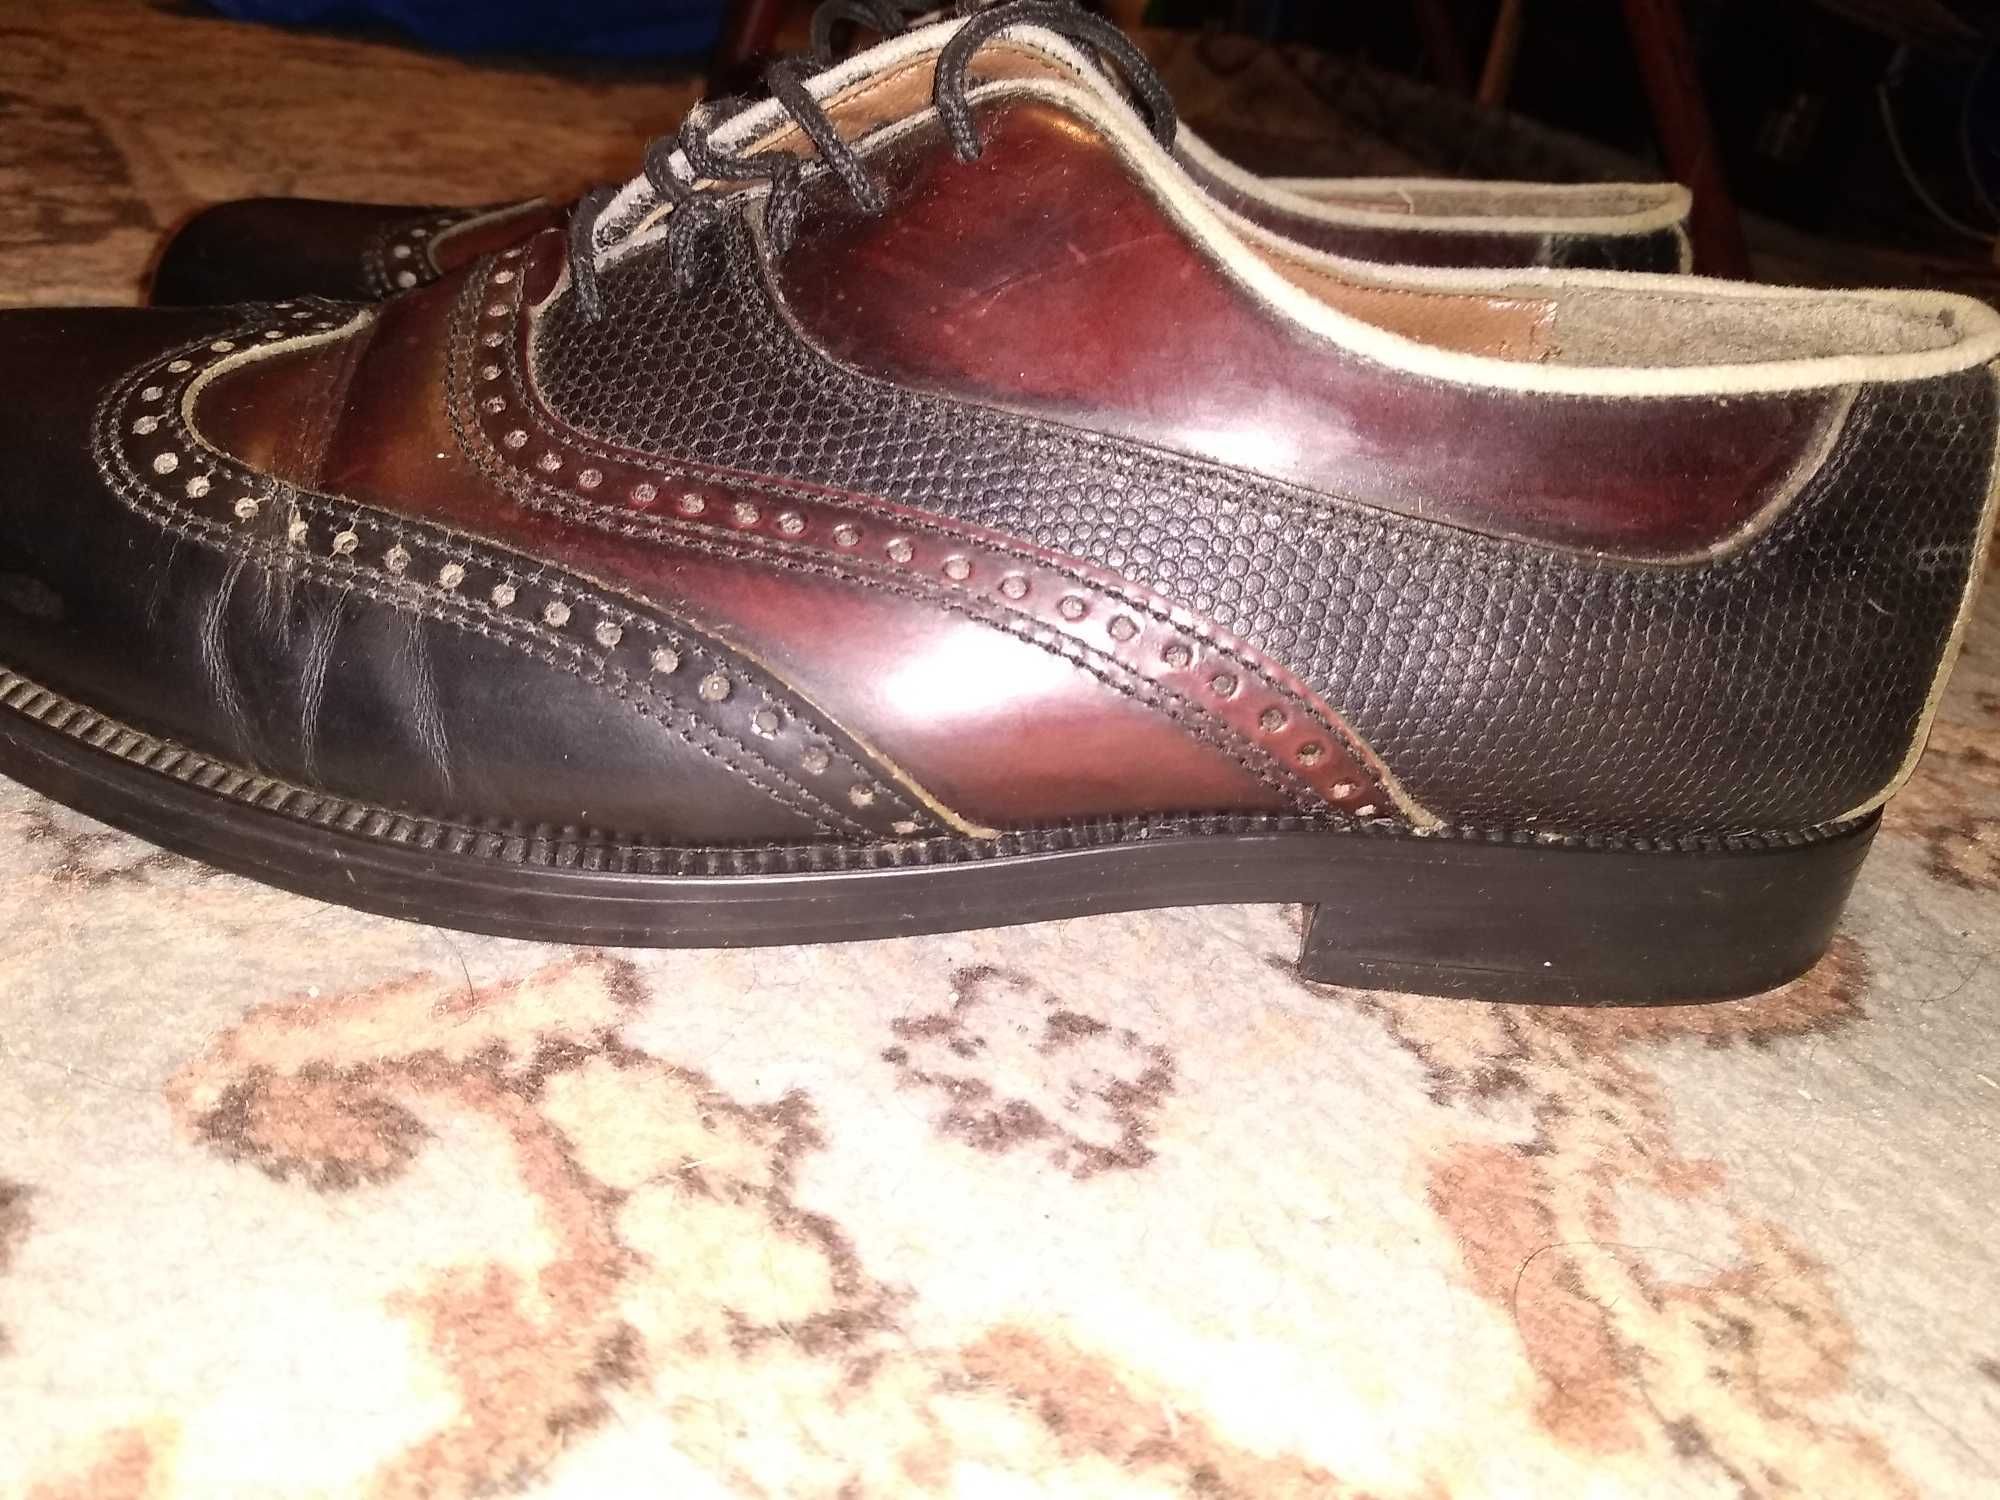 Pantofi bărbătești din piele naturala Nr 41 made in italy